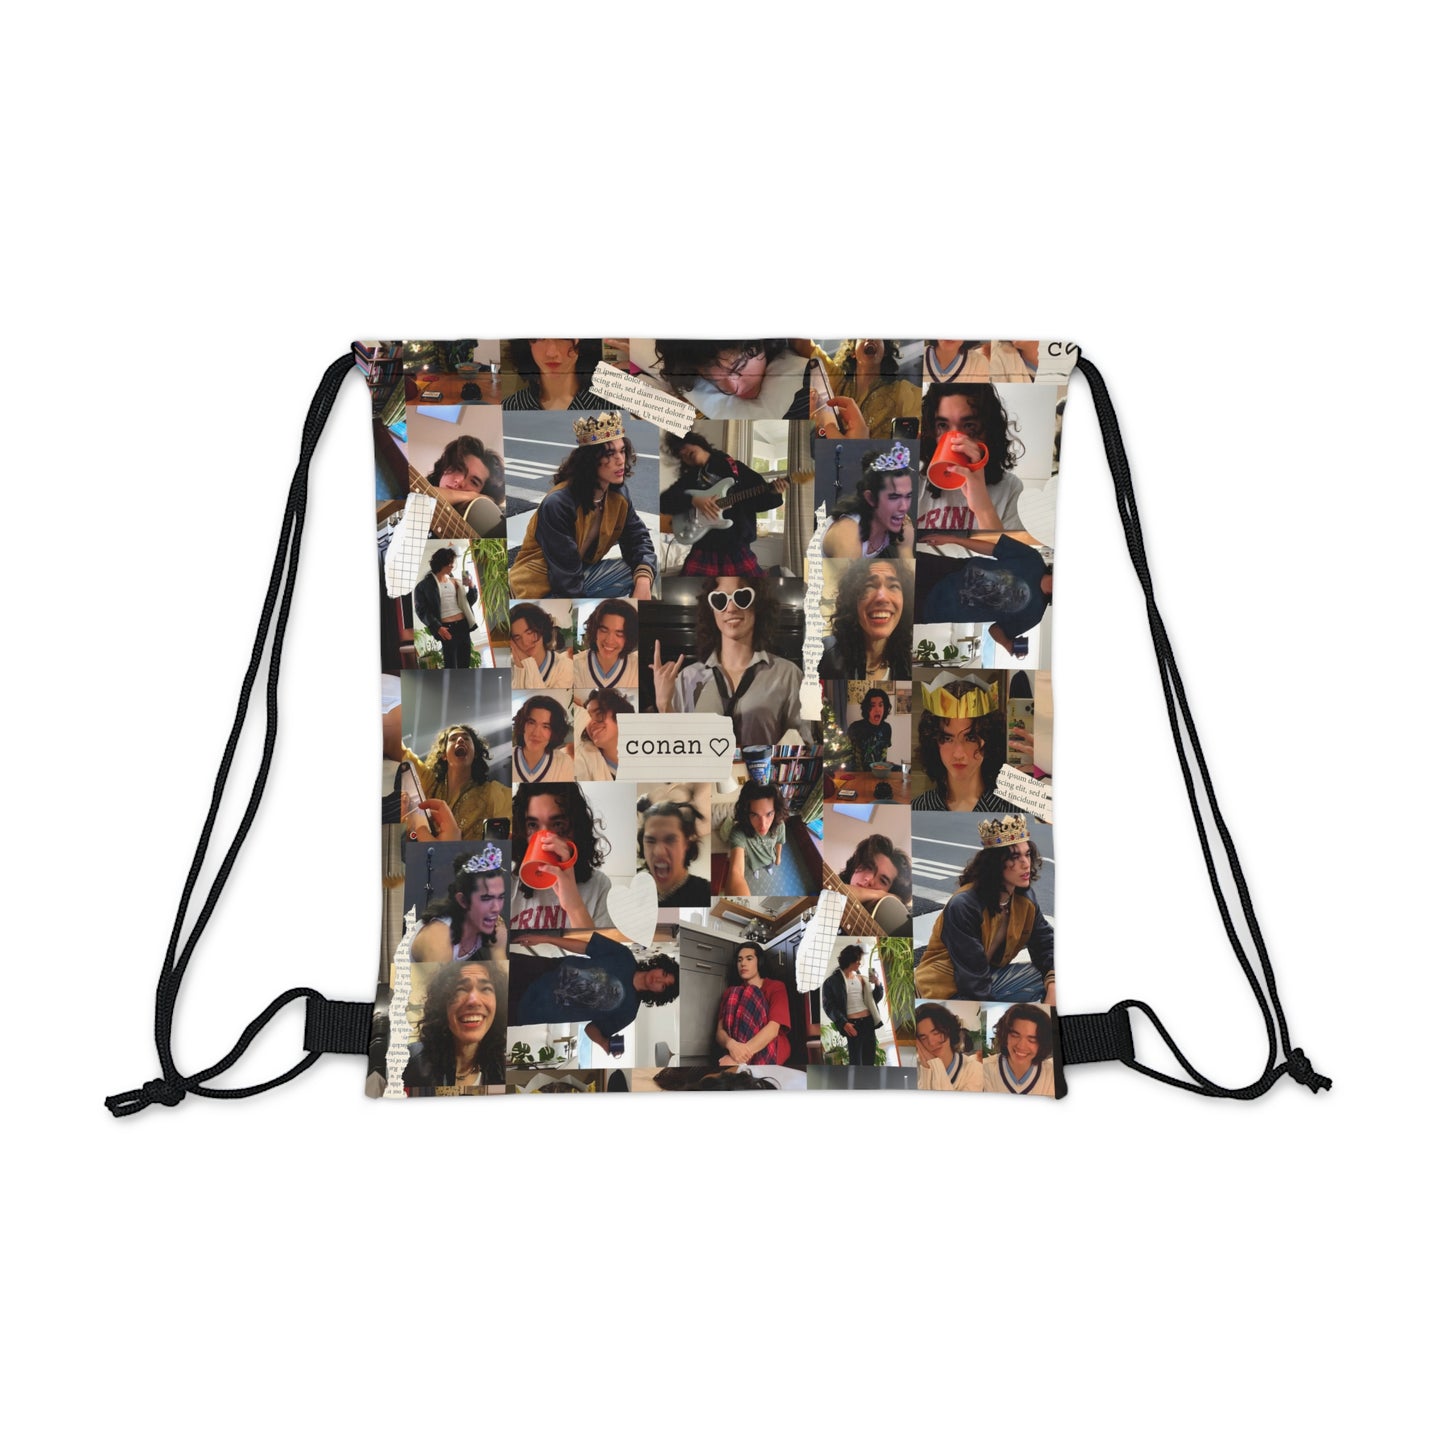 Conan Grey Being Cute Photo Collage Outdoor Drawstring Bag